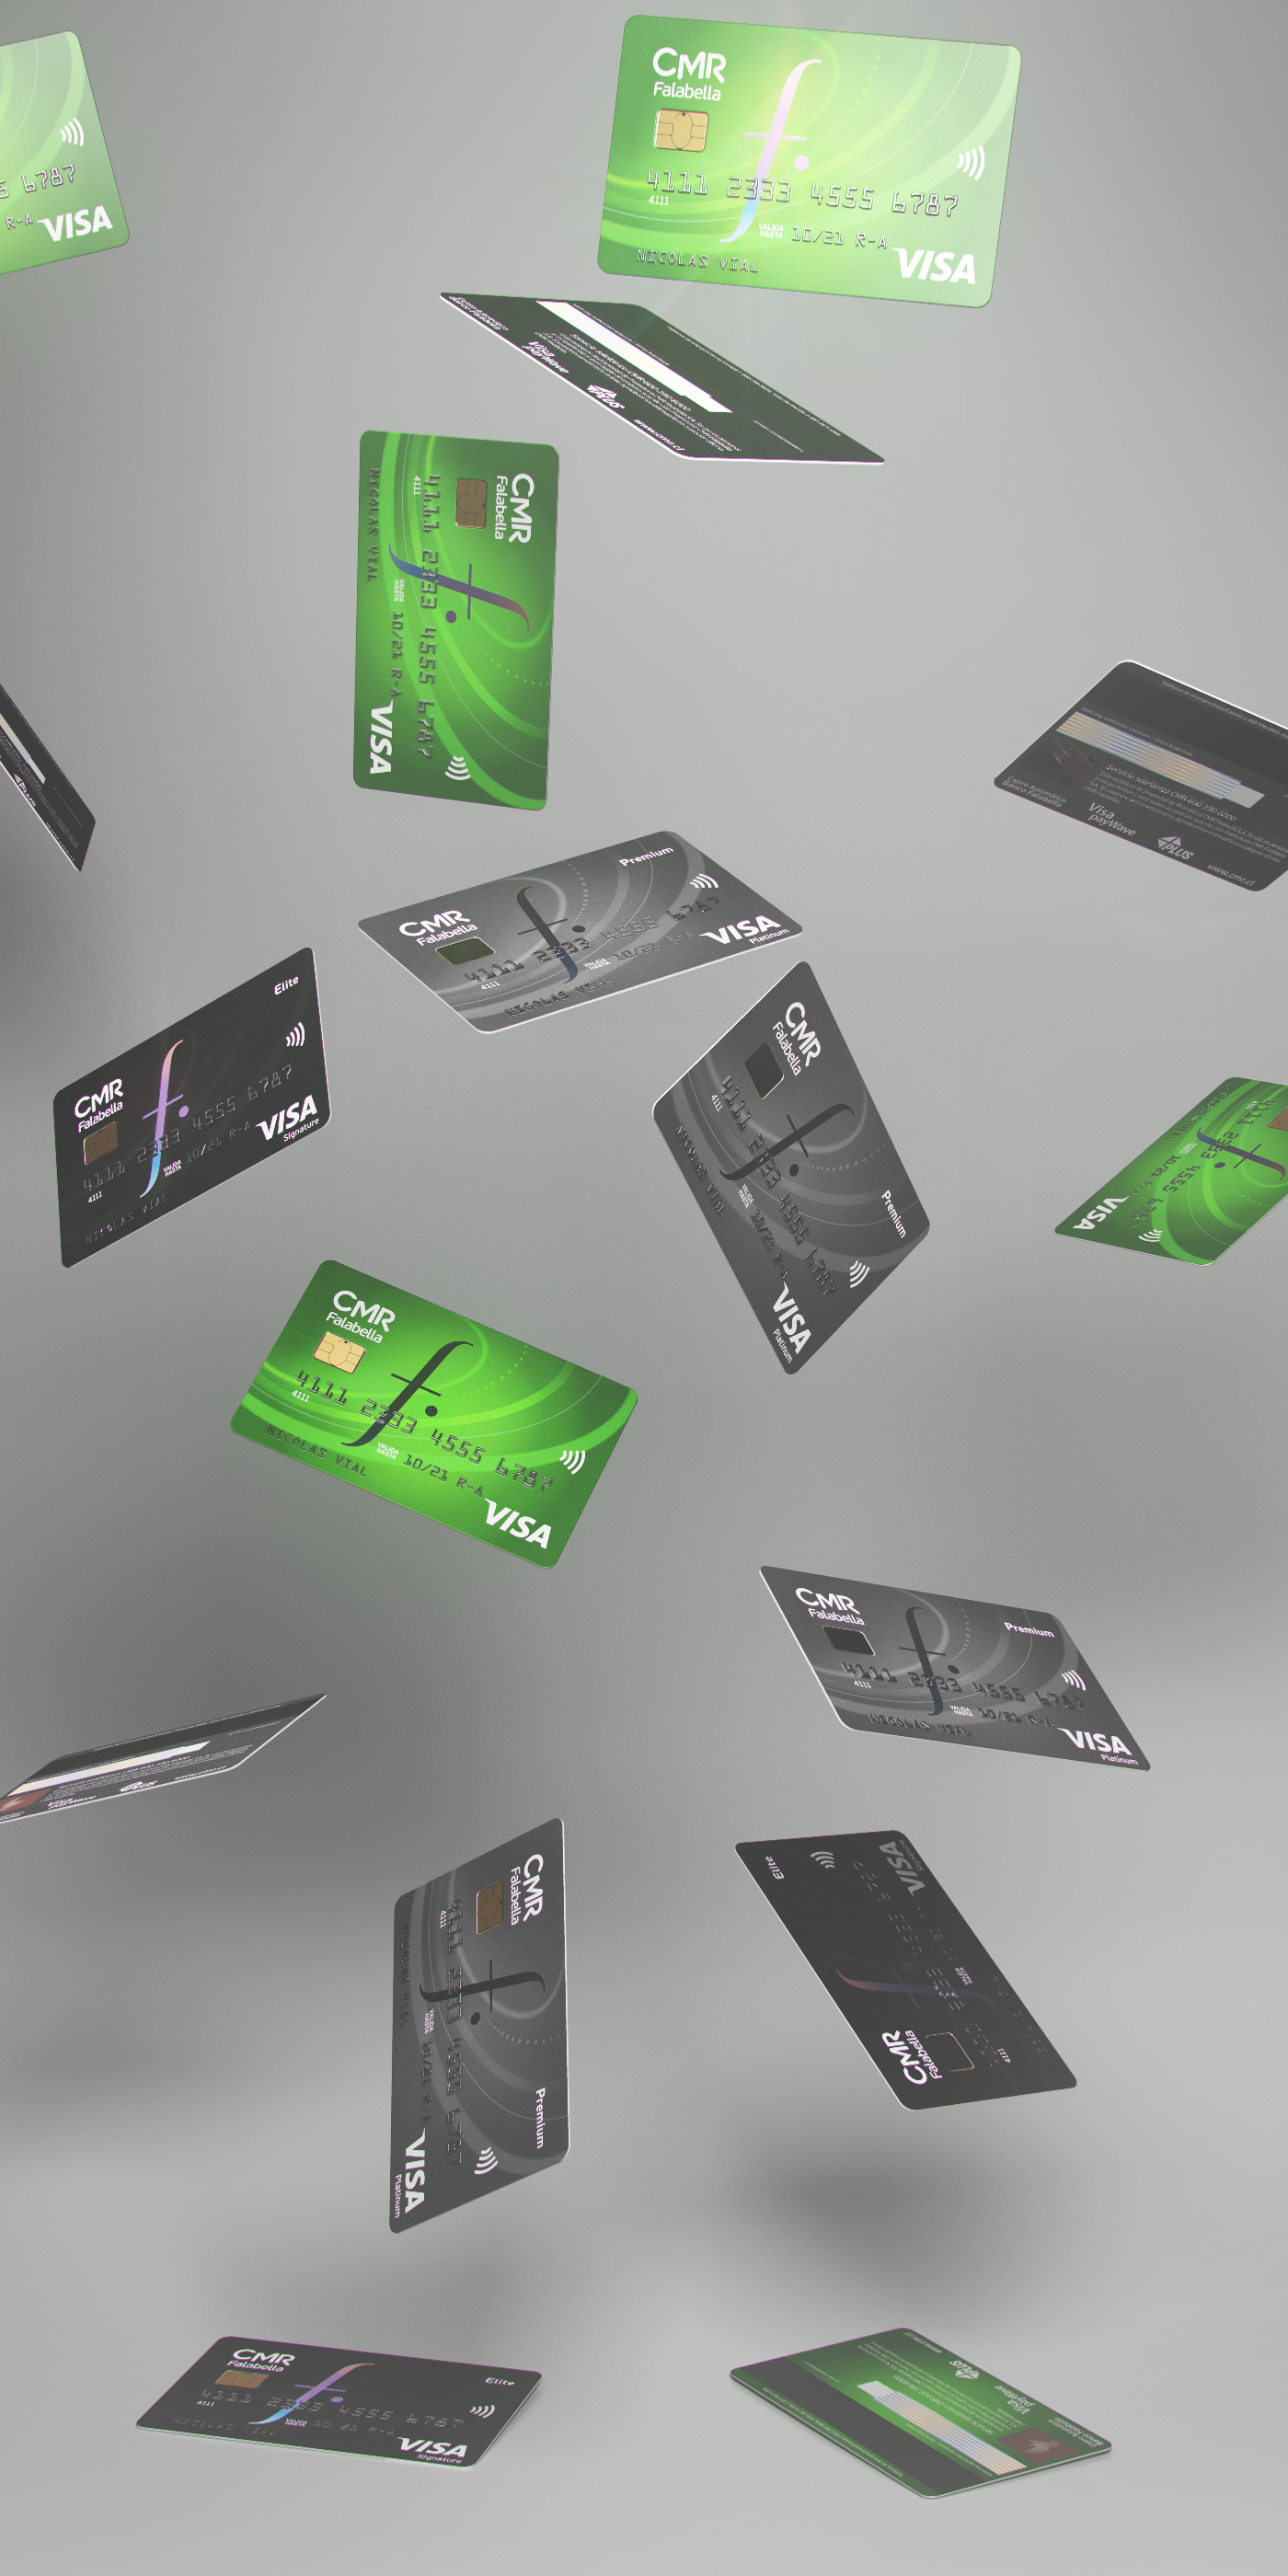 packshots CGI 3D credit card Visa cmr falabella mental ray